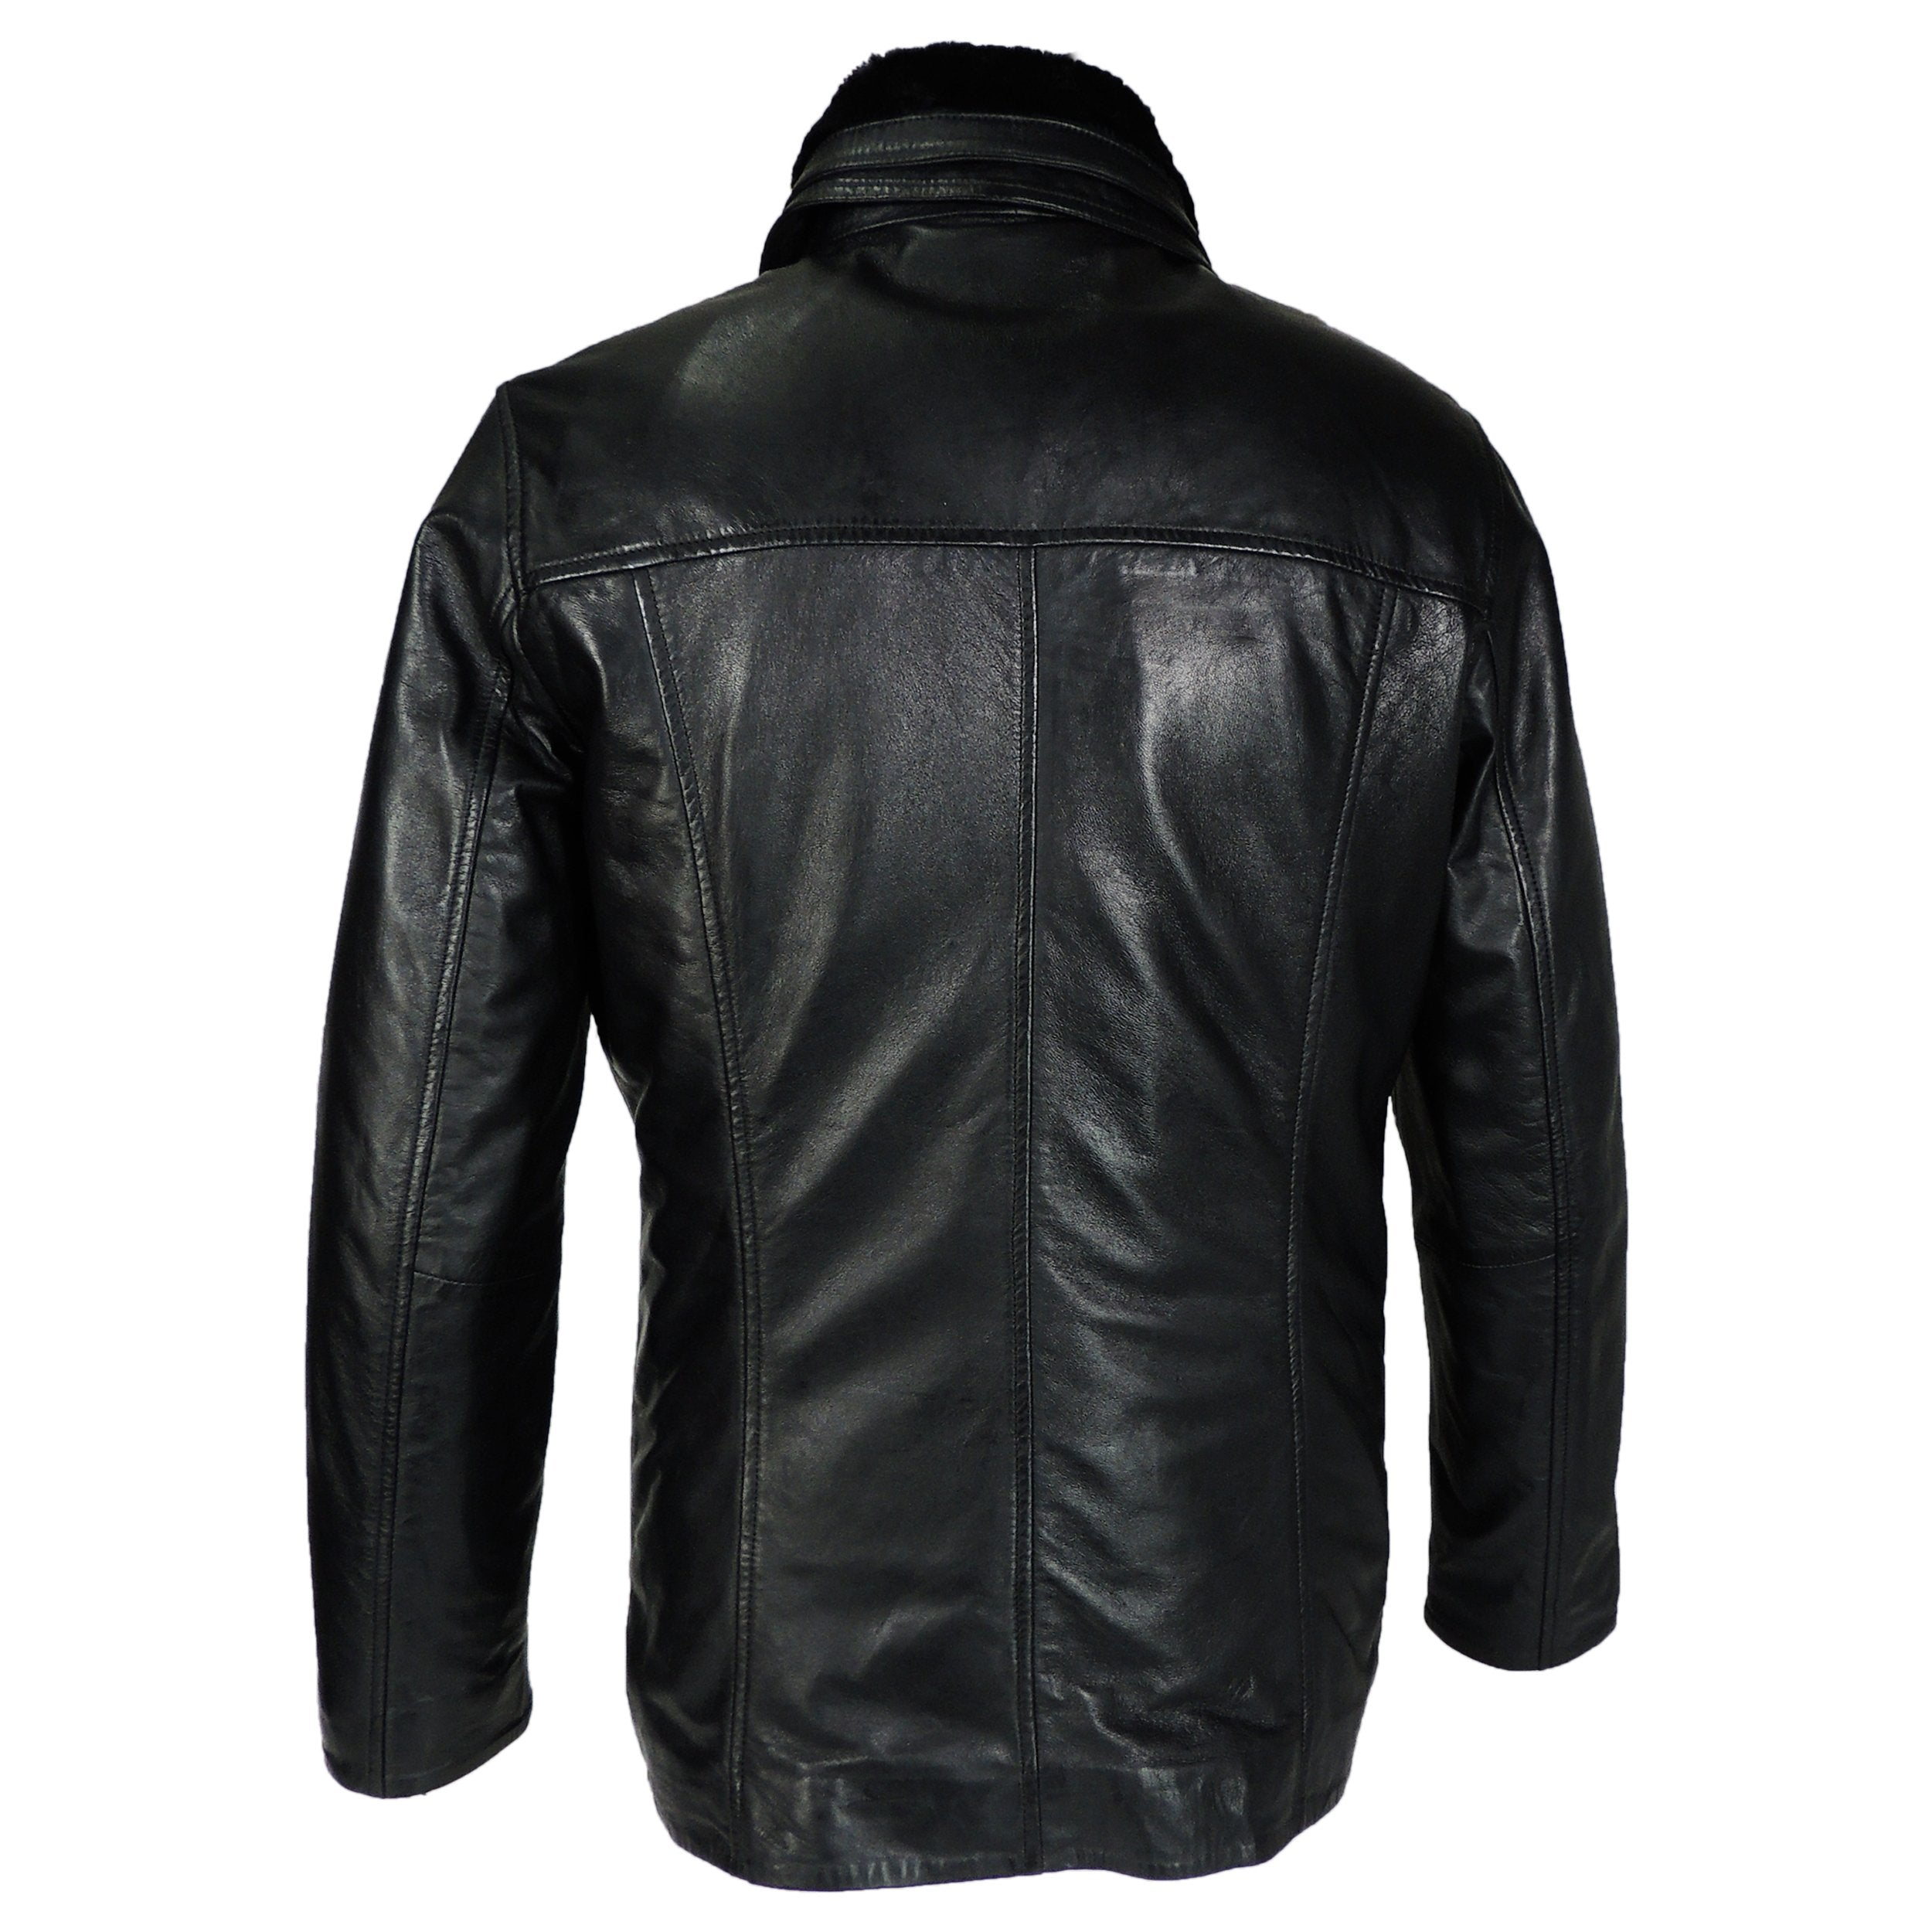 Ahsa Mens Leather Coat w/ Fur Collar, [option2] - Fadcloset